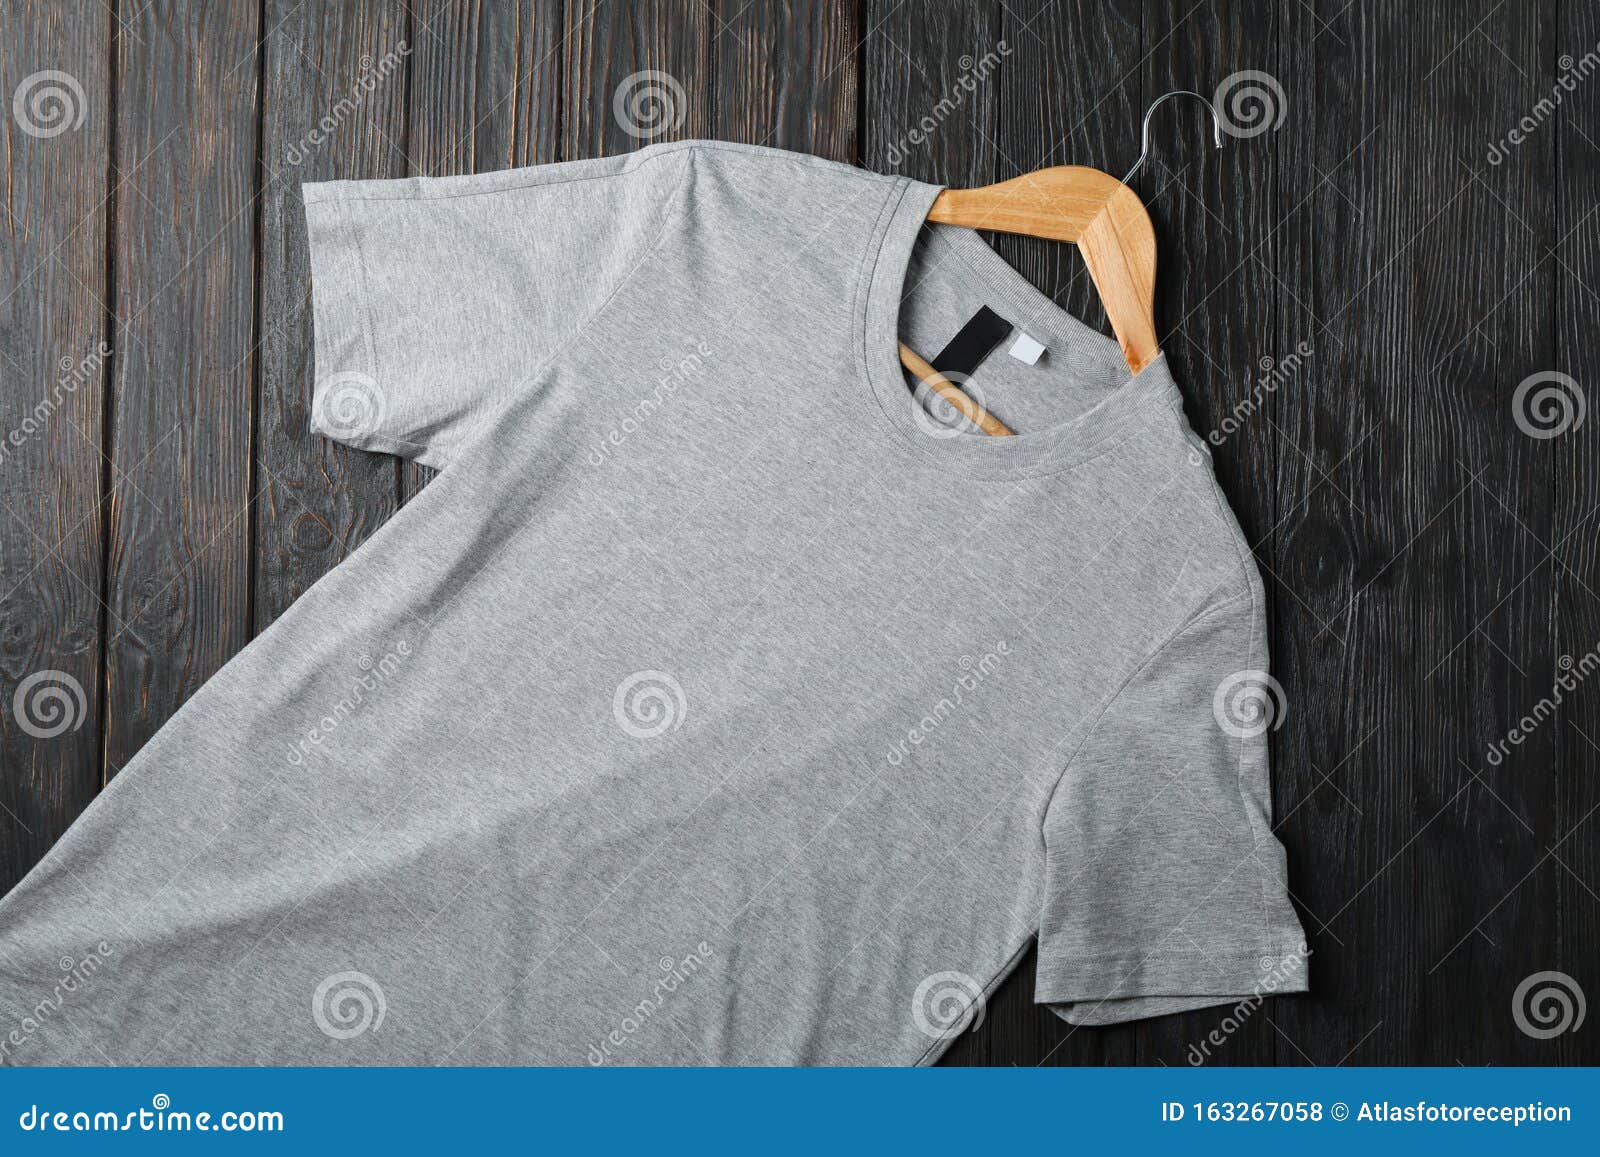 https://thumbs.dreamstime.com/z/hanger-blank-gray-t-shirt-wooden-background-hanger-blank-gray-t-shirt-wooden-background-space-text-163267058.jpg